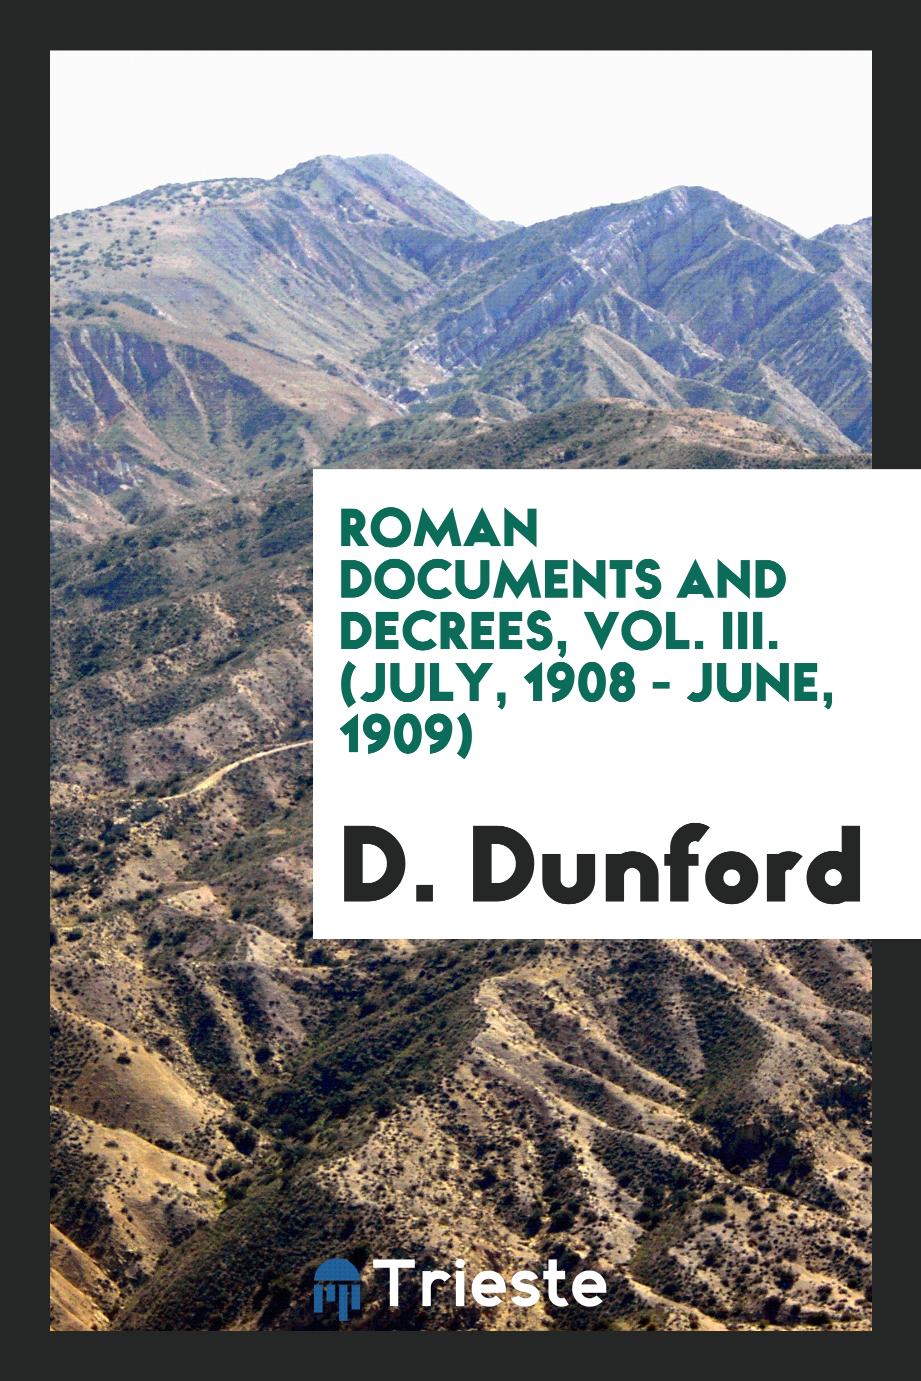 Roman documents and decrees, Vol. III. (July, 1908 - June, 1909)